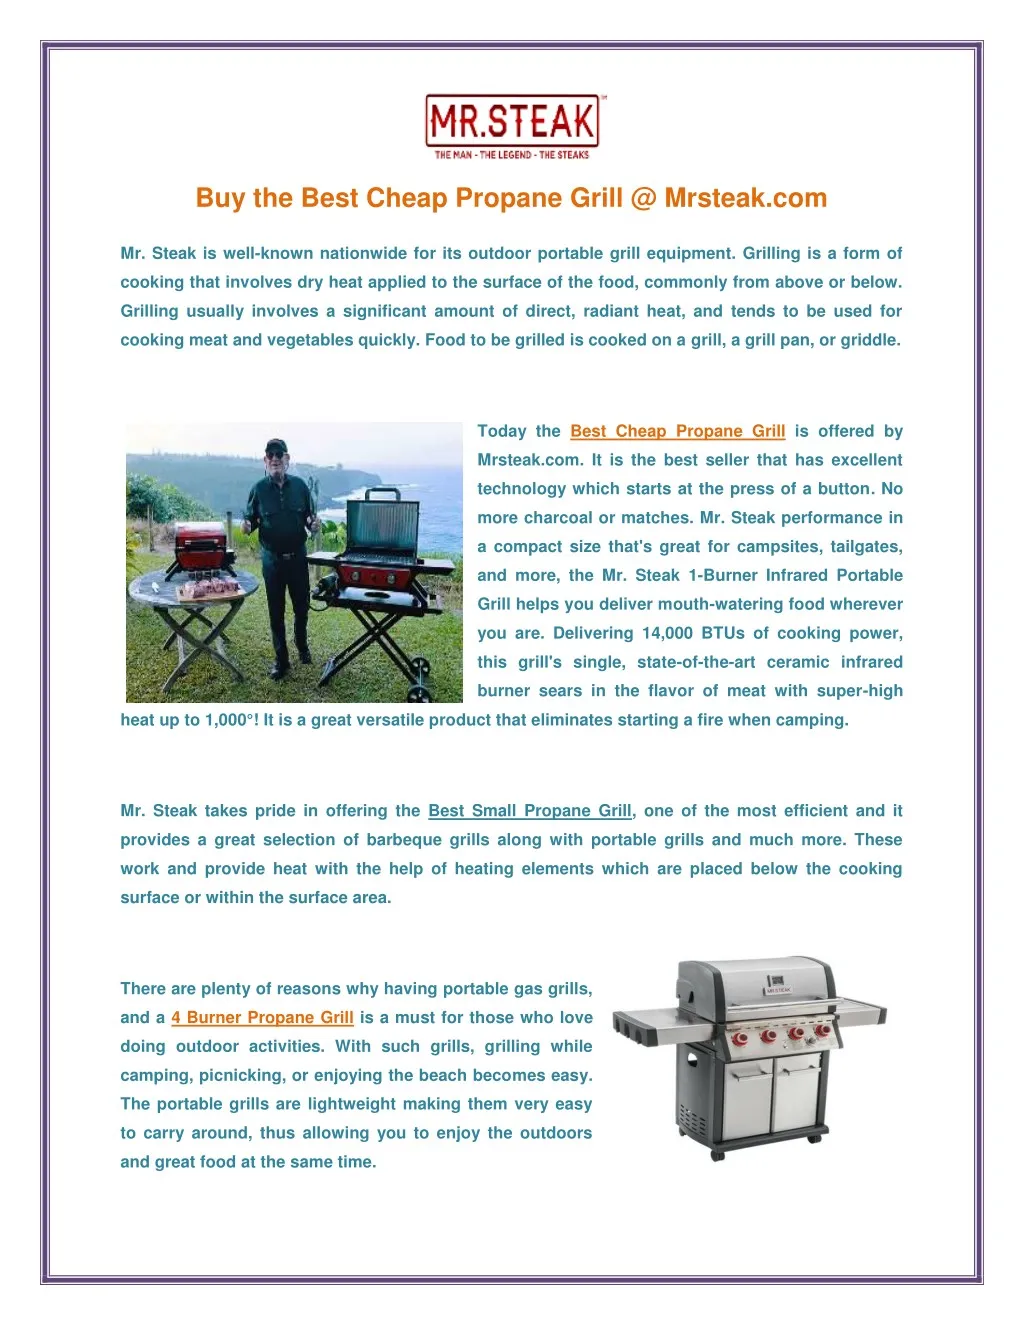 buy the best cheap propane grill @ mrsteak com